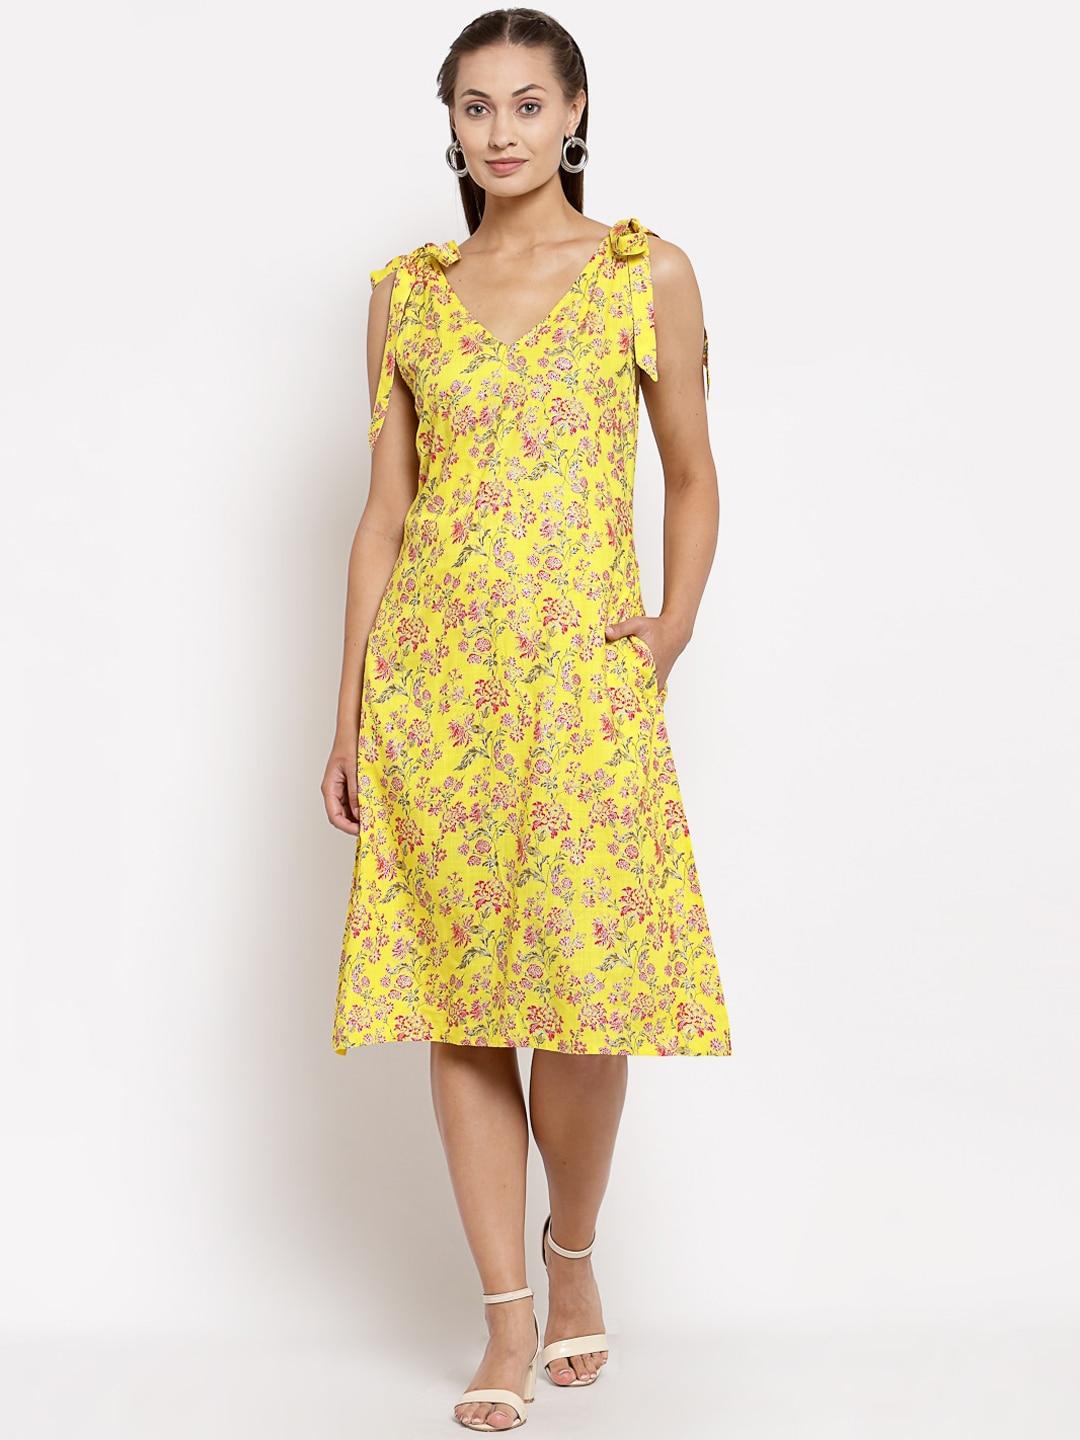 myshka-yellow-floral-printed-a-line-dress